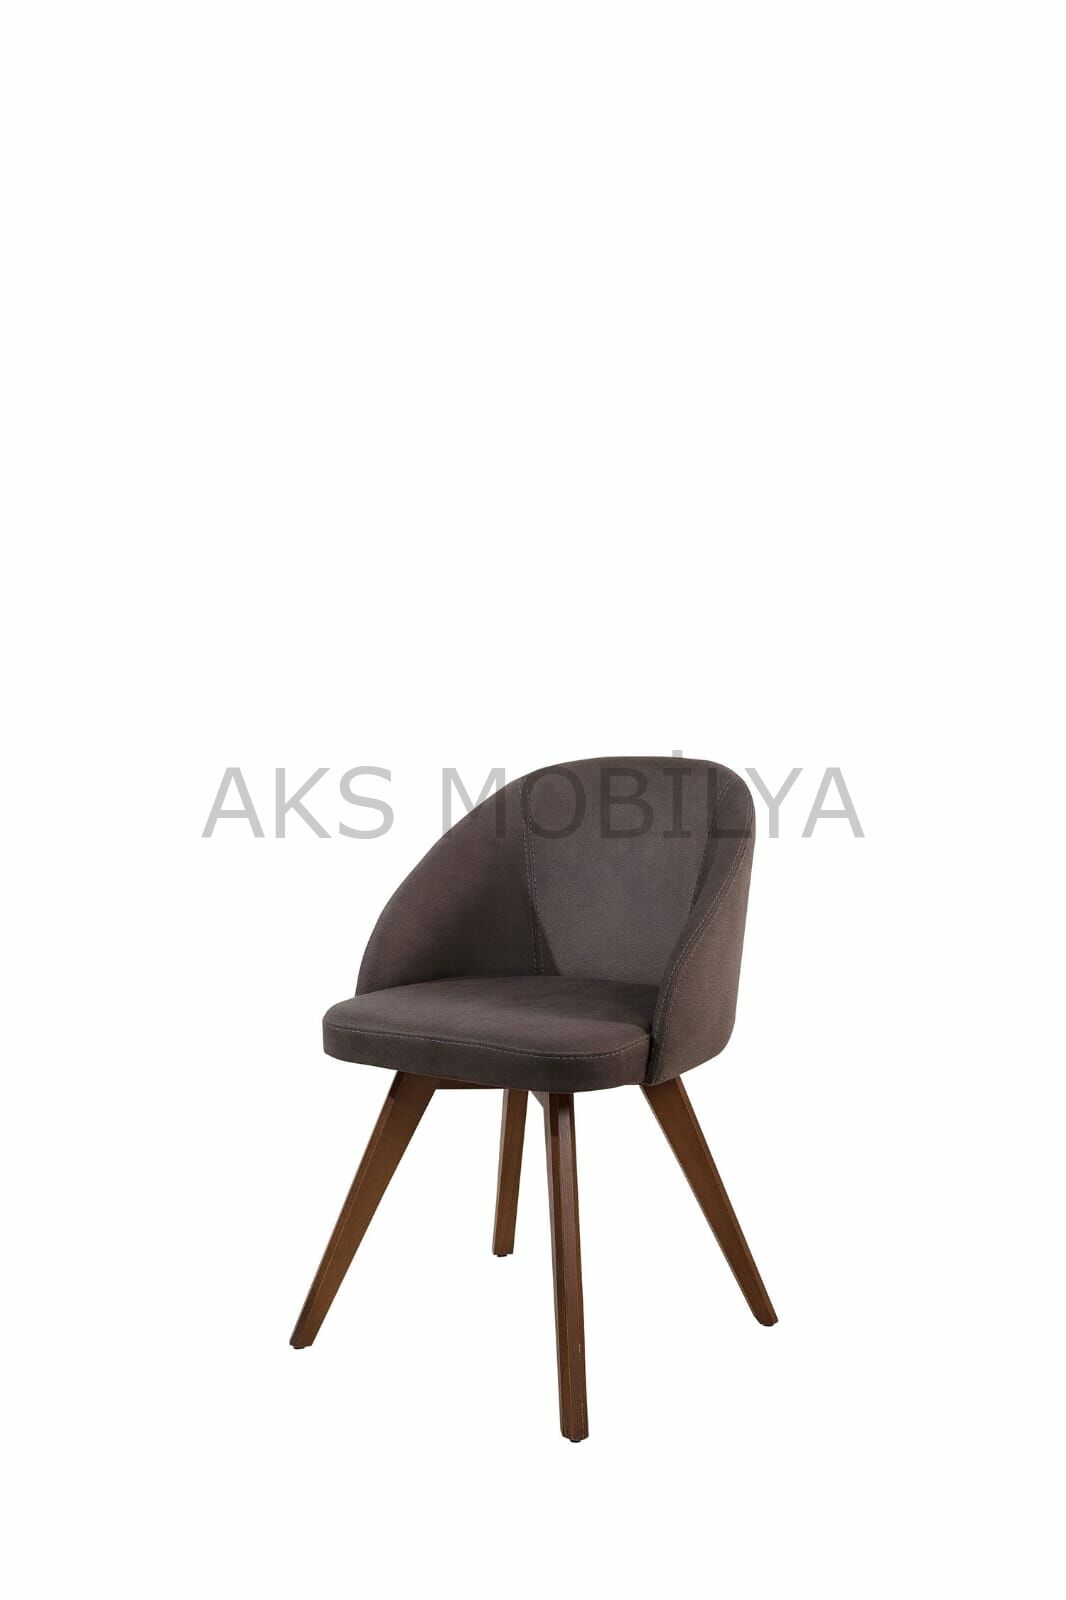 Sandalye Modeli 004